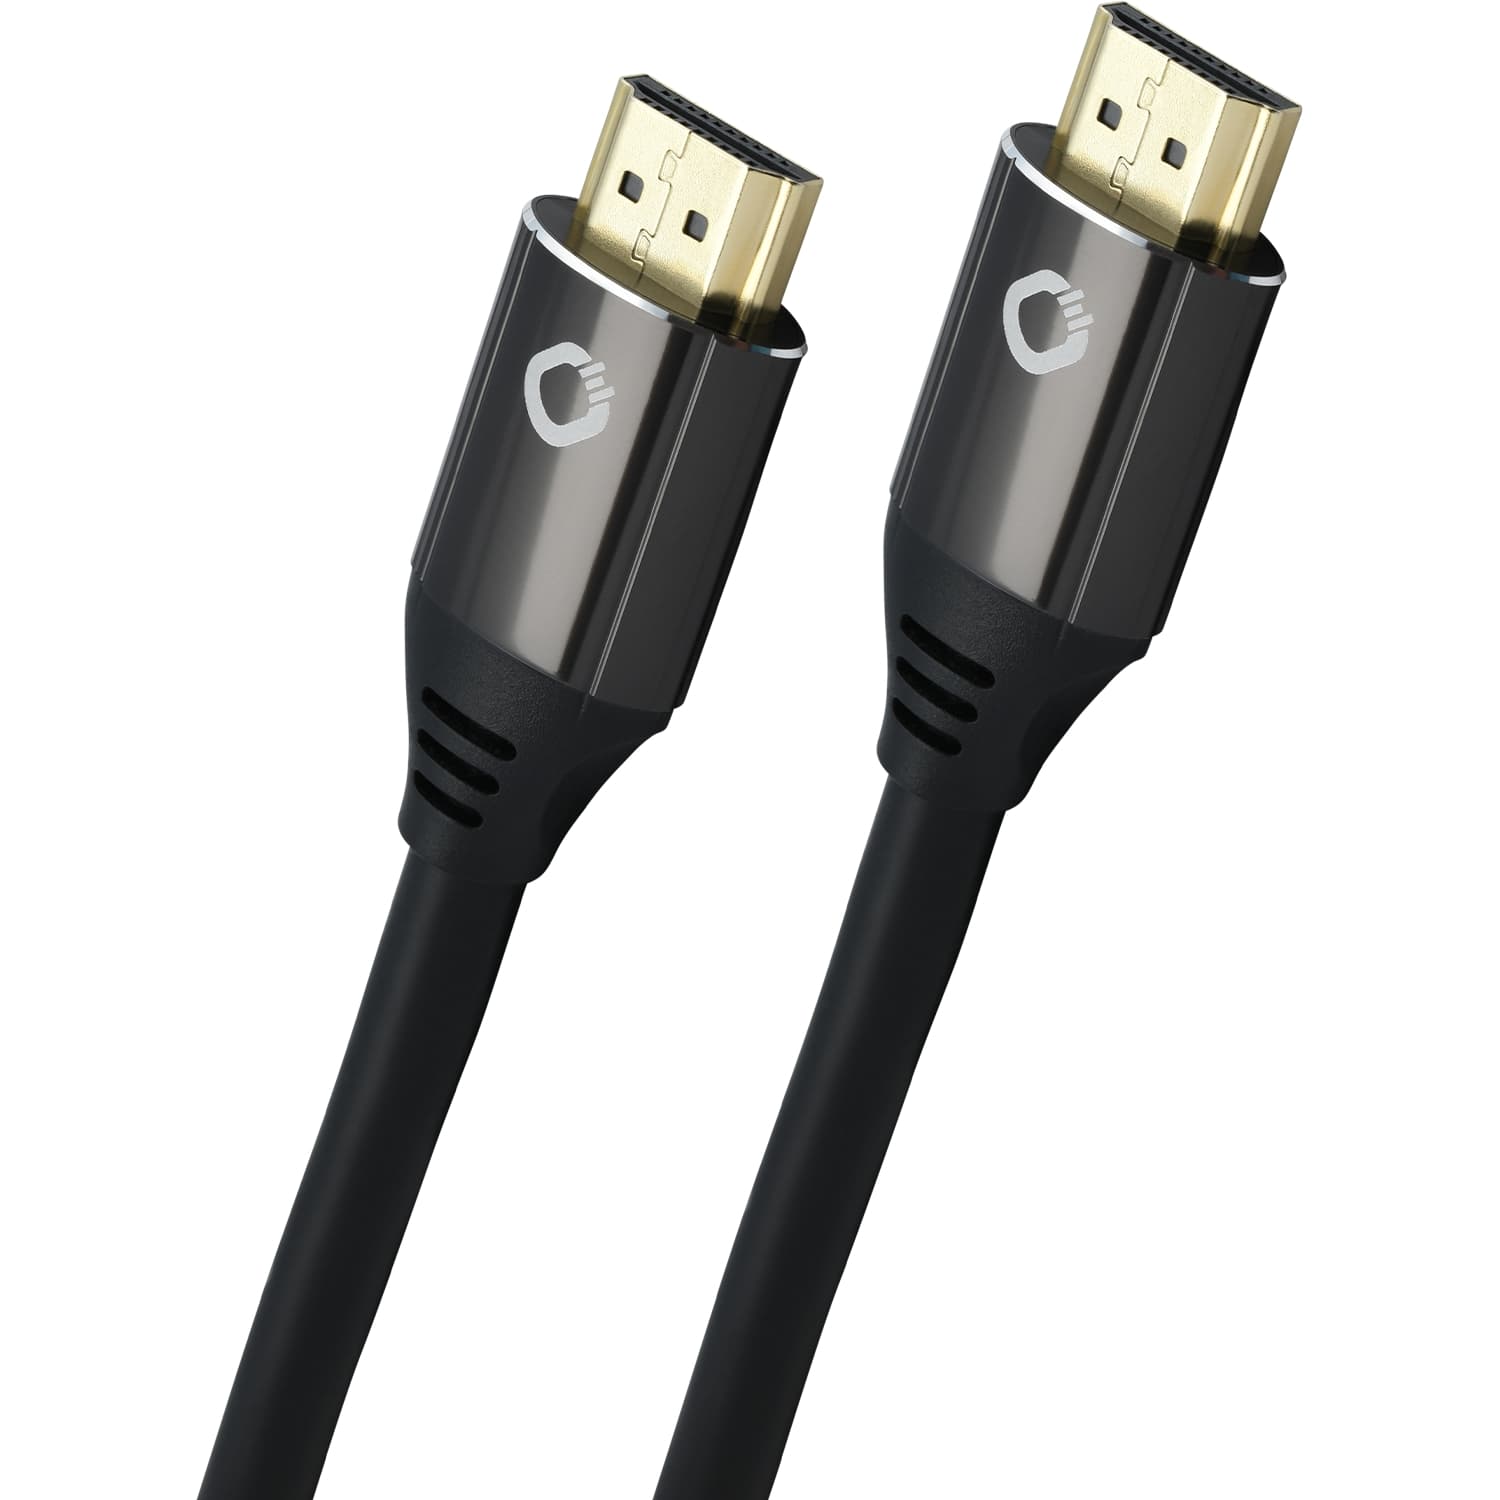 HDMI кабели Oehlbach PERFORMANCE Black Magic MKII, UHS HDMI, 5,0m black, D1C92496 hdmi кабели qed qe6032 performance ultra hdmi 1 5m